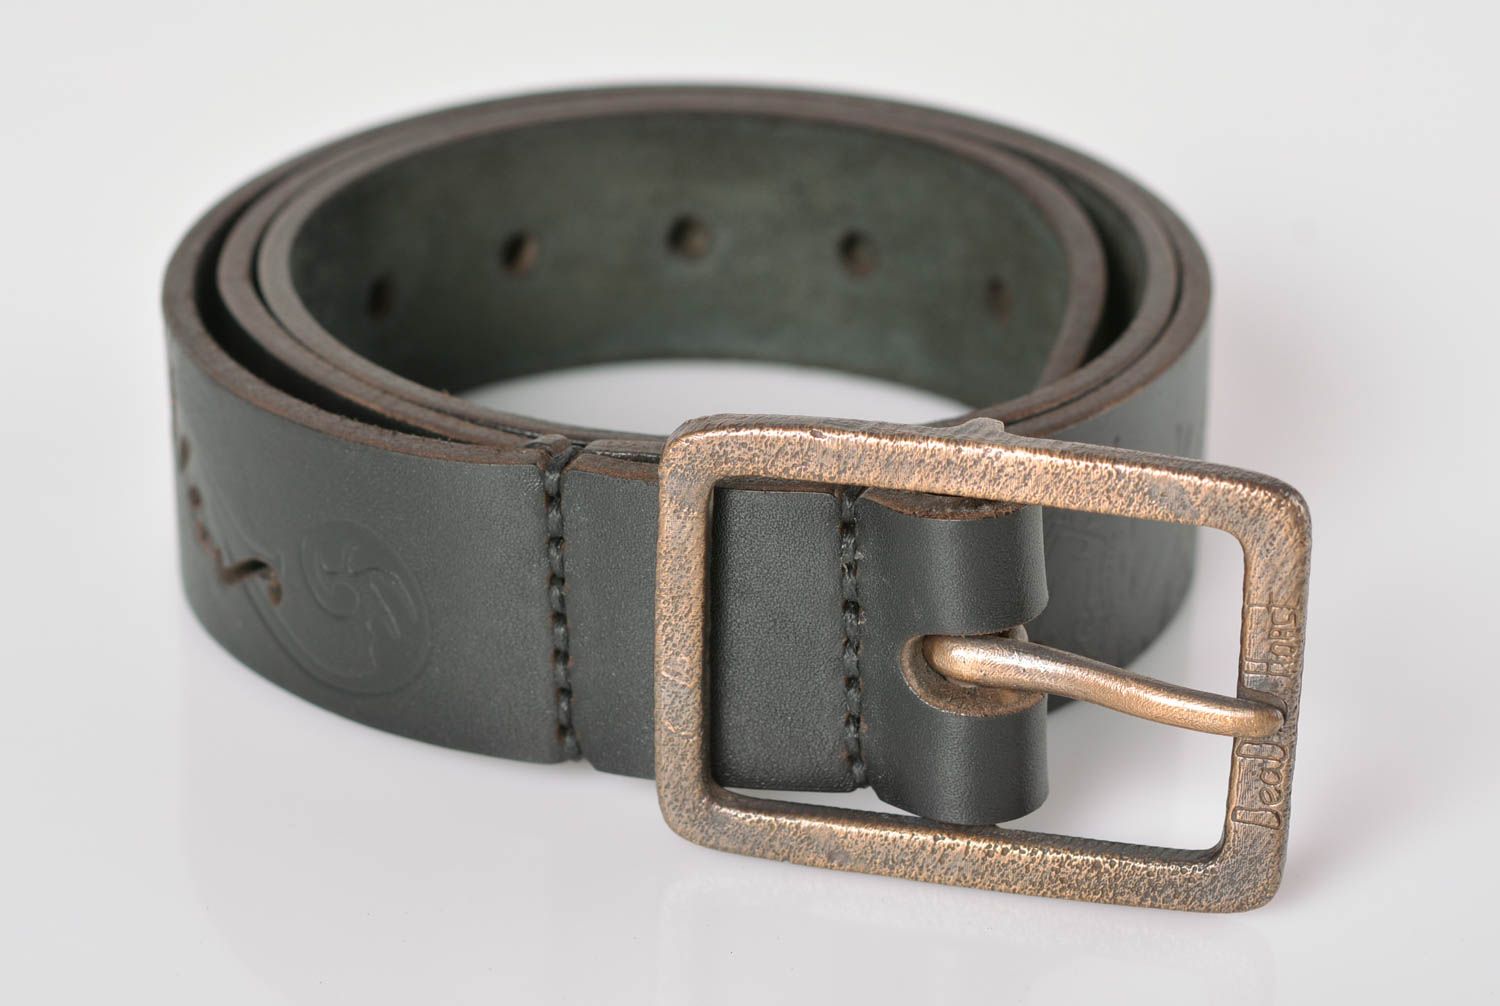 Handmade leather belt designer belts handmade leather goods men accessories photo 1